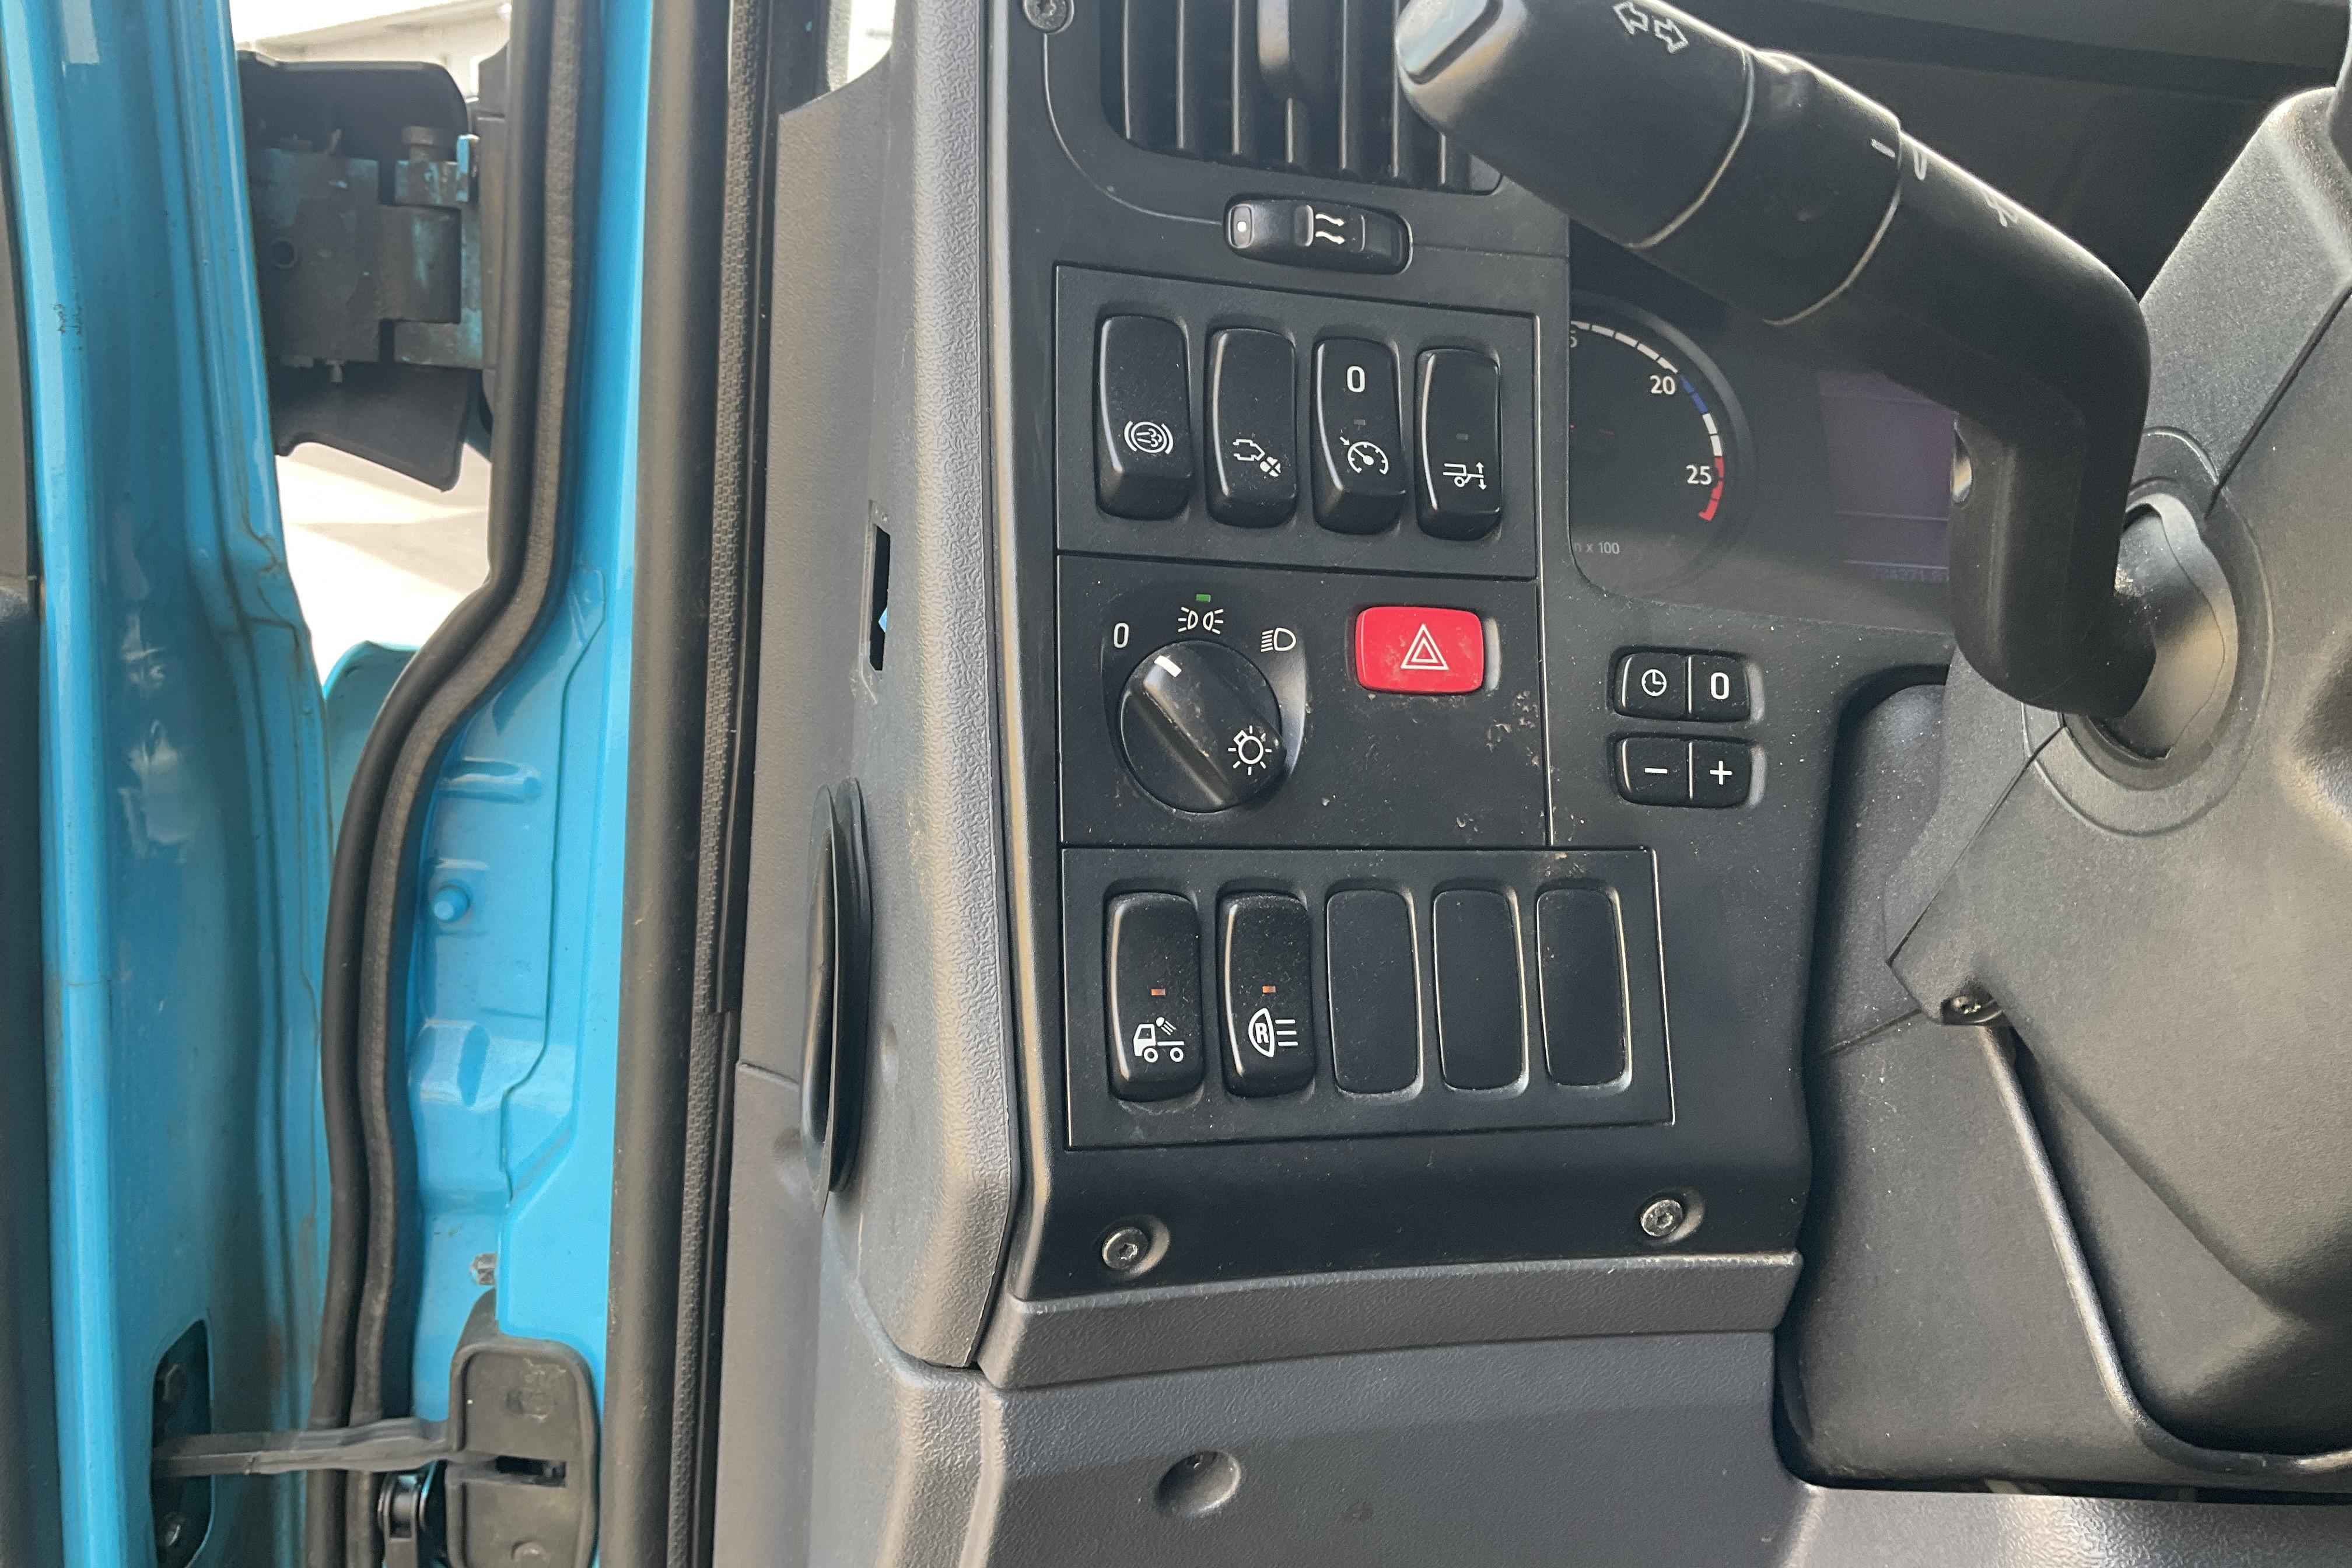 Scania P230 - 734 271 km - Automat - blå - 2013